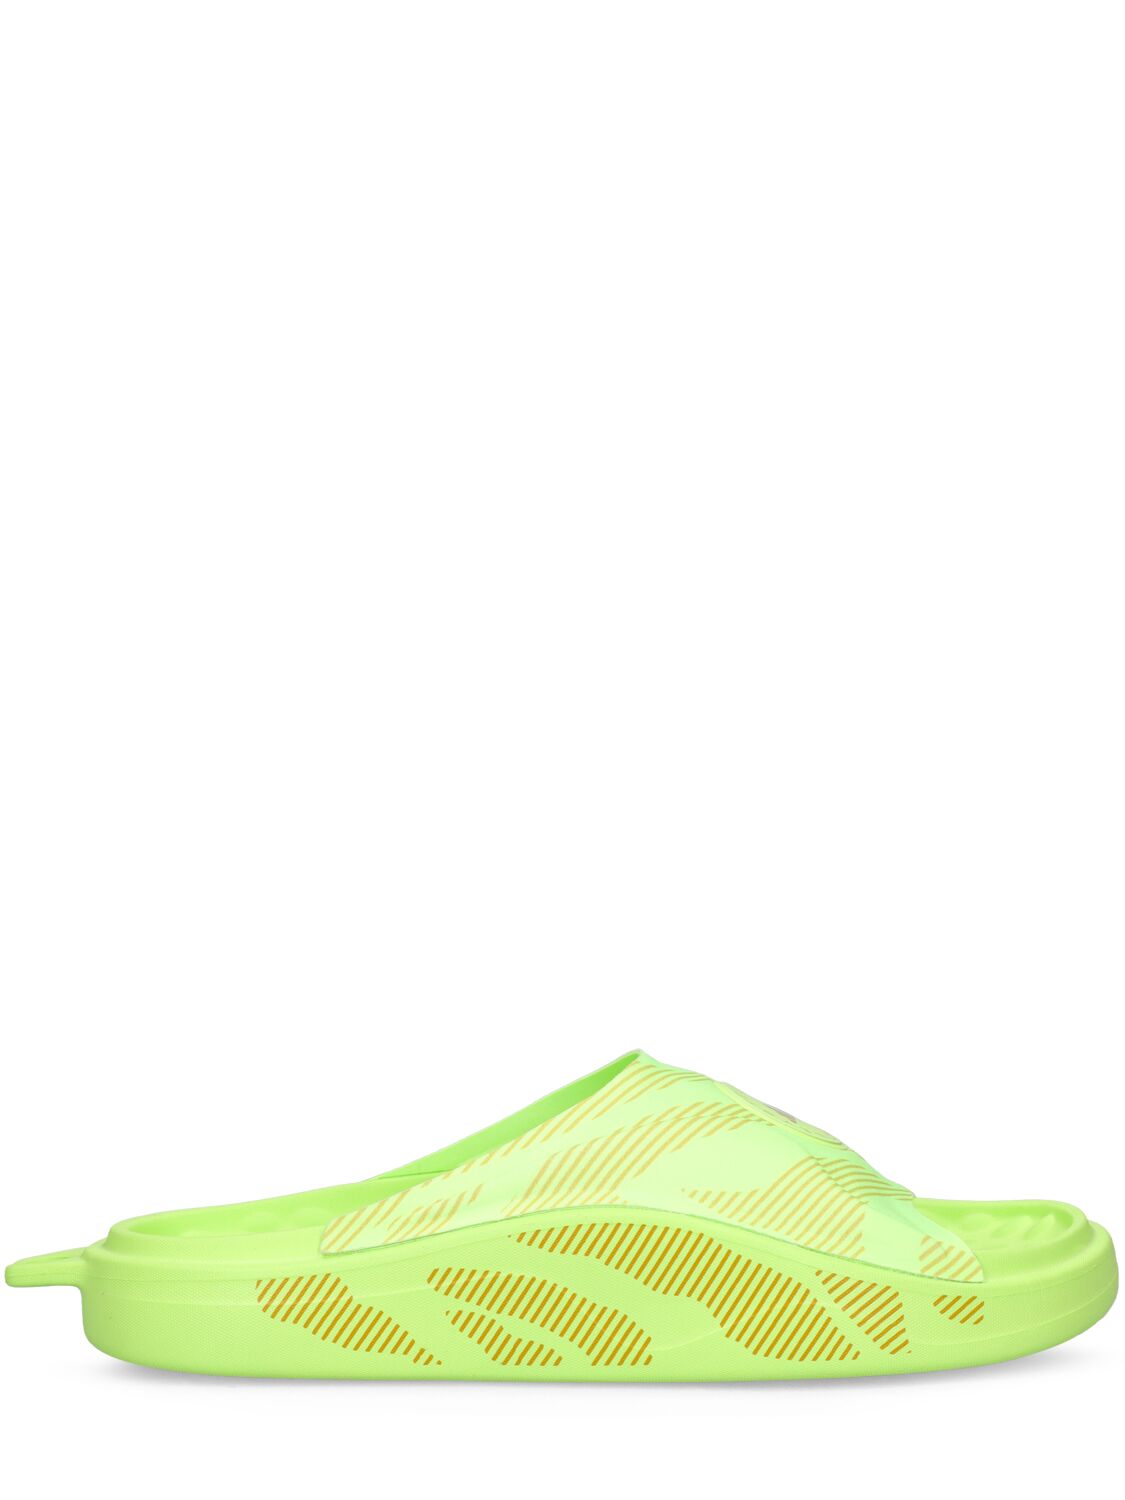 Adidas By Stella Mccartney Asmc Slide Sandals In Lime Green